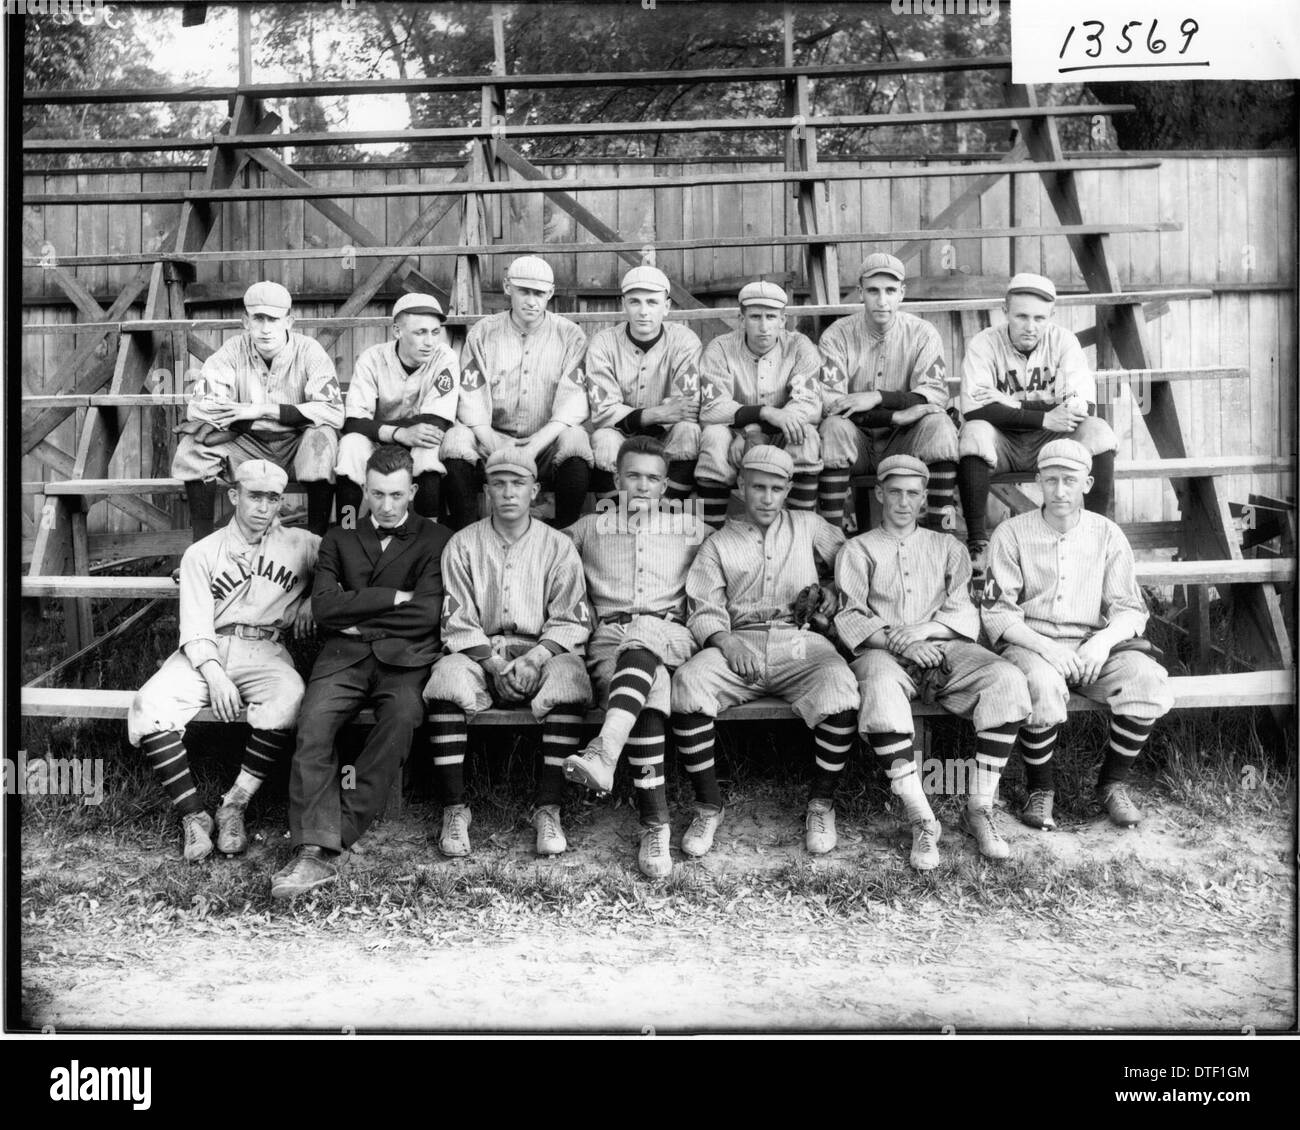 miami-university-baseball-team-in-1914-stock-photo-alamy